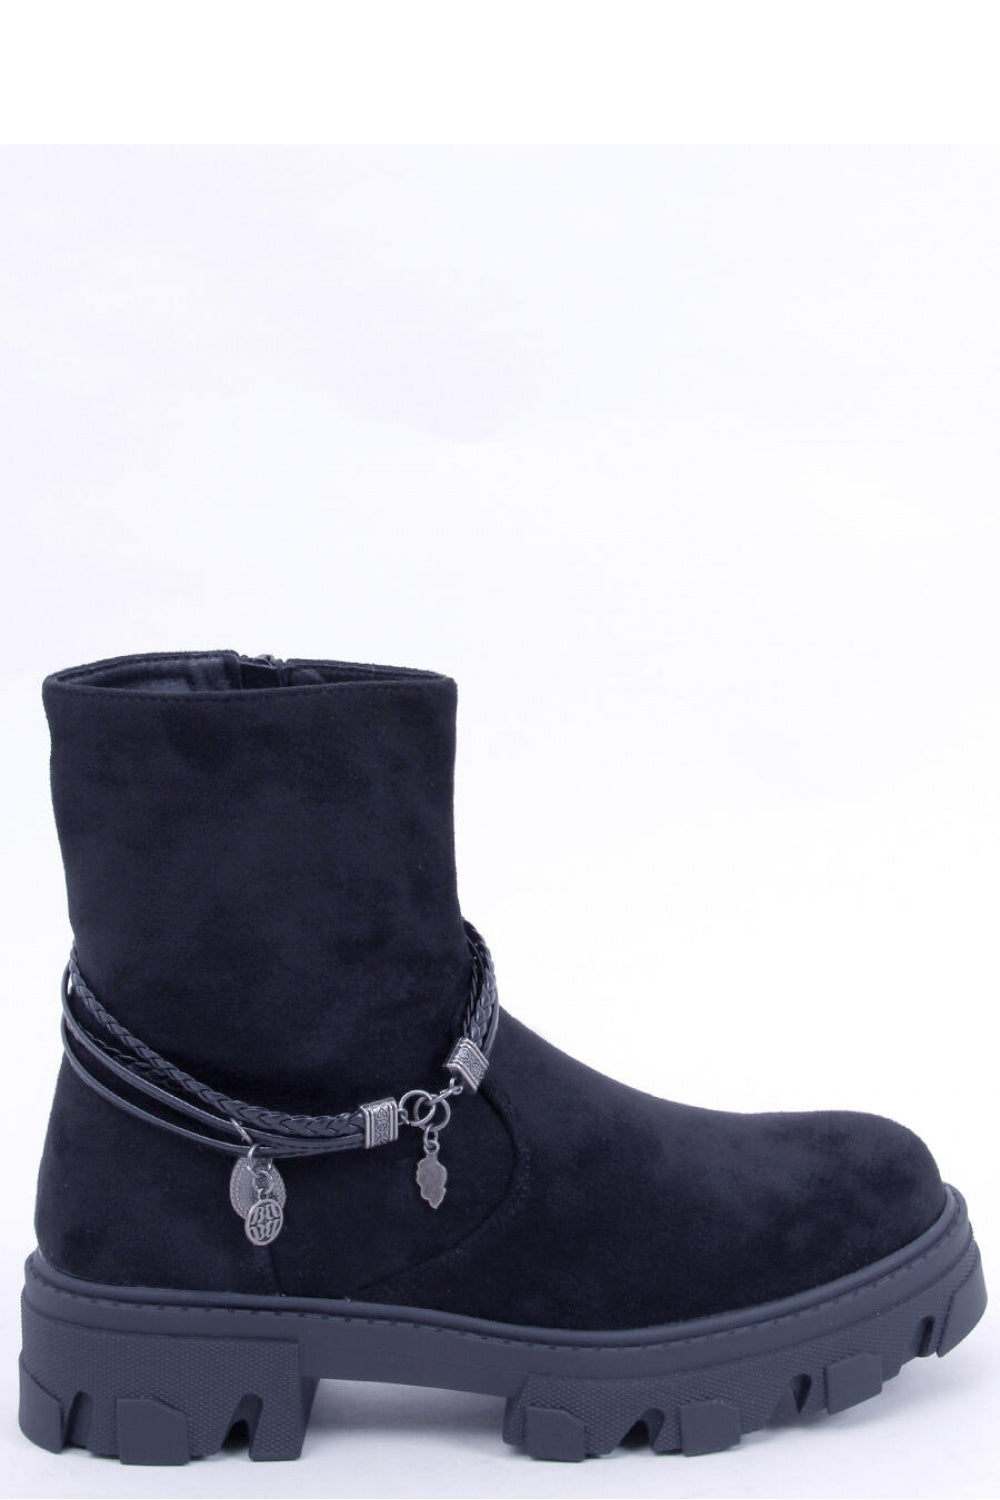 Boots model 171502 Inello Posh Styles Apparel